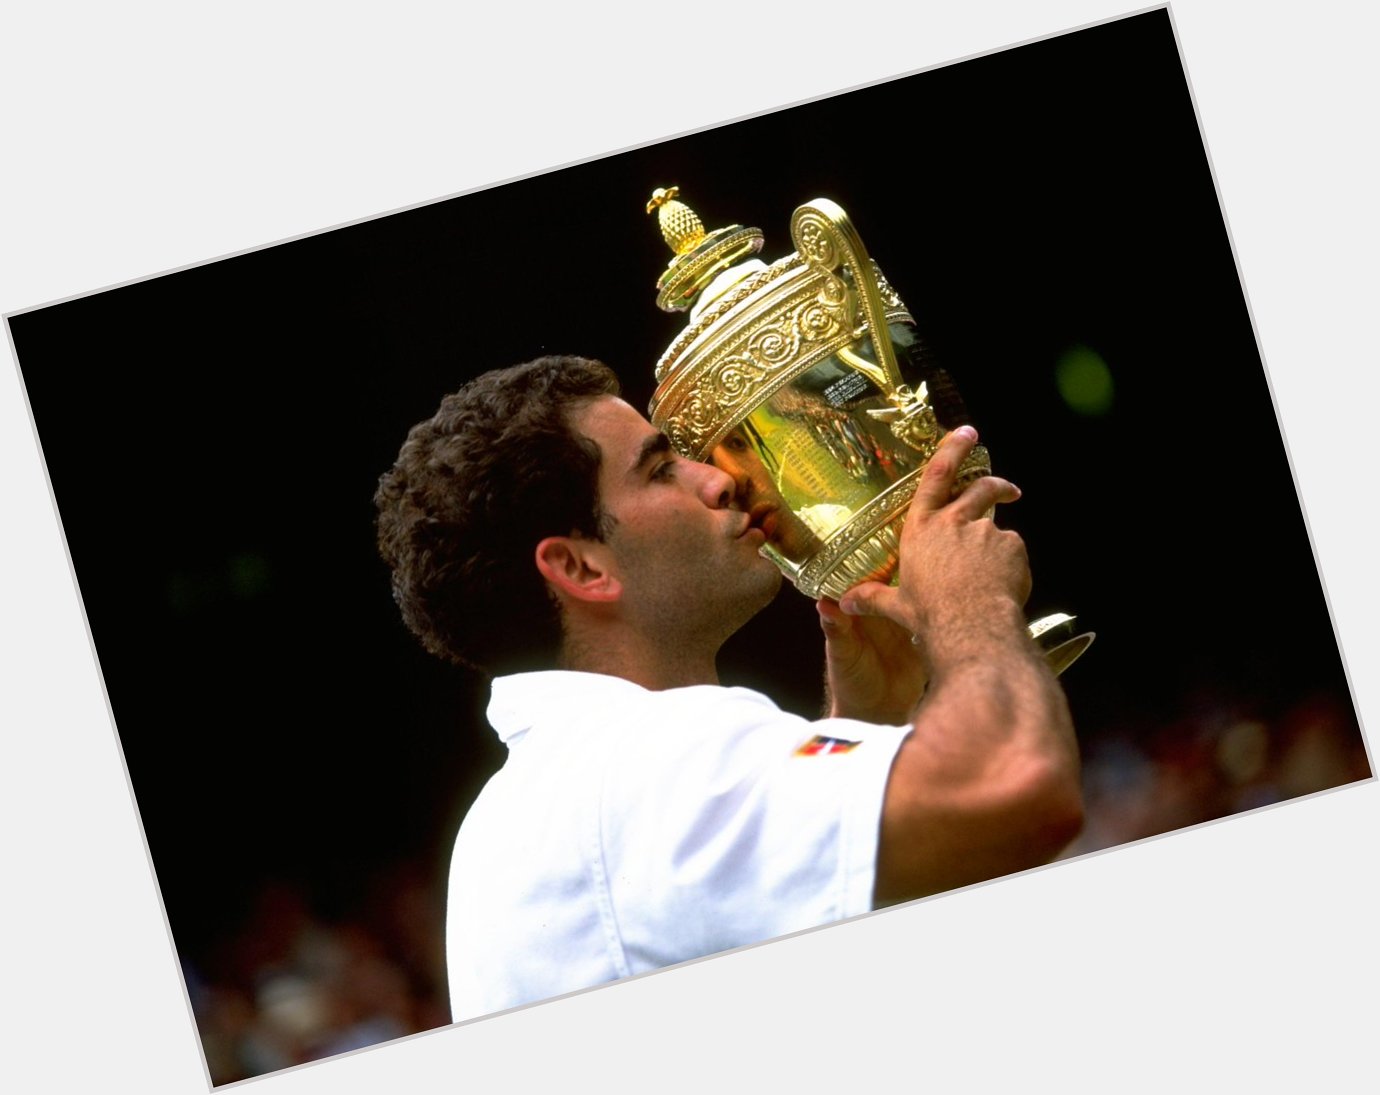 Happy Birthday to Pete Sampras winner of 14 Grand Slam titles, including 7 Wimbledon titles! 